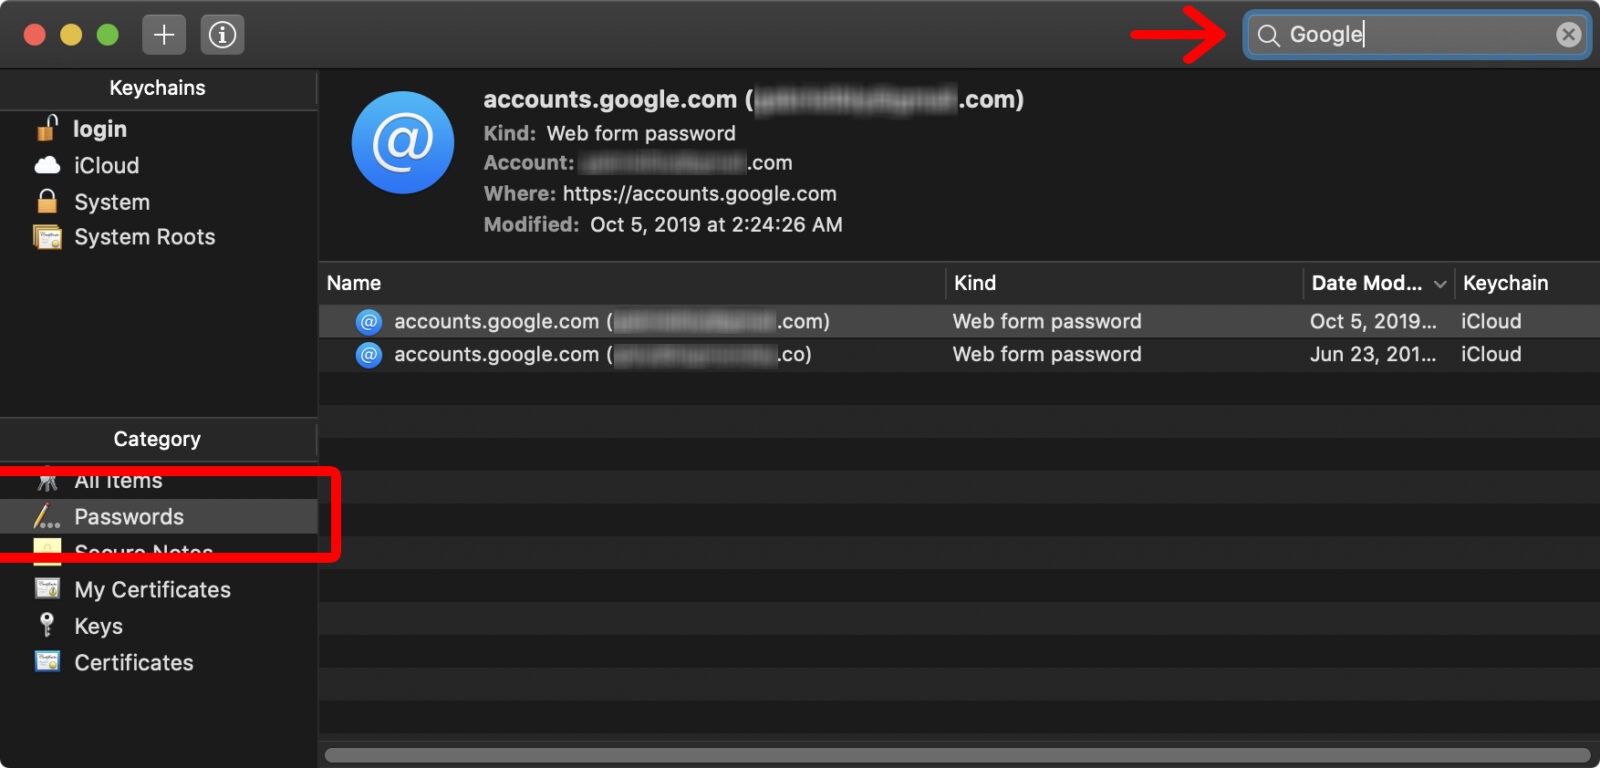 accessing passwords on mac